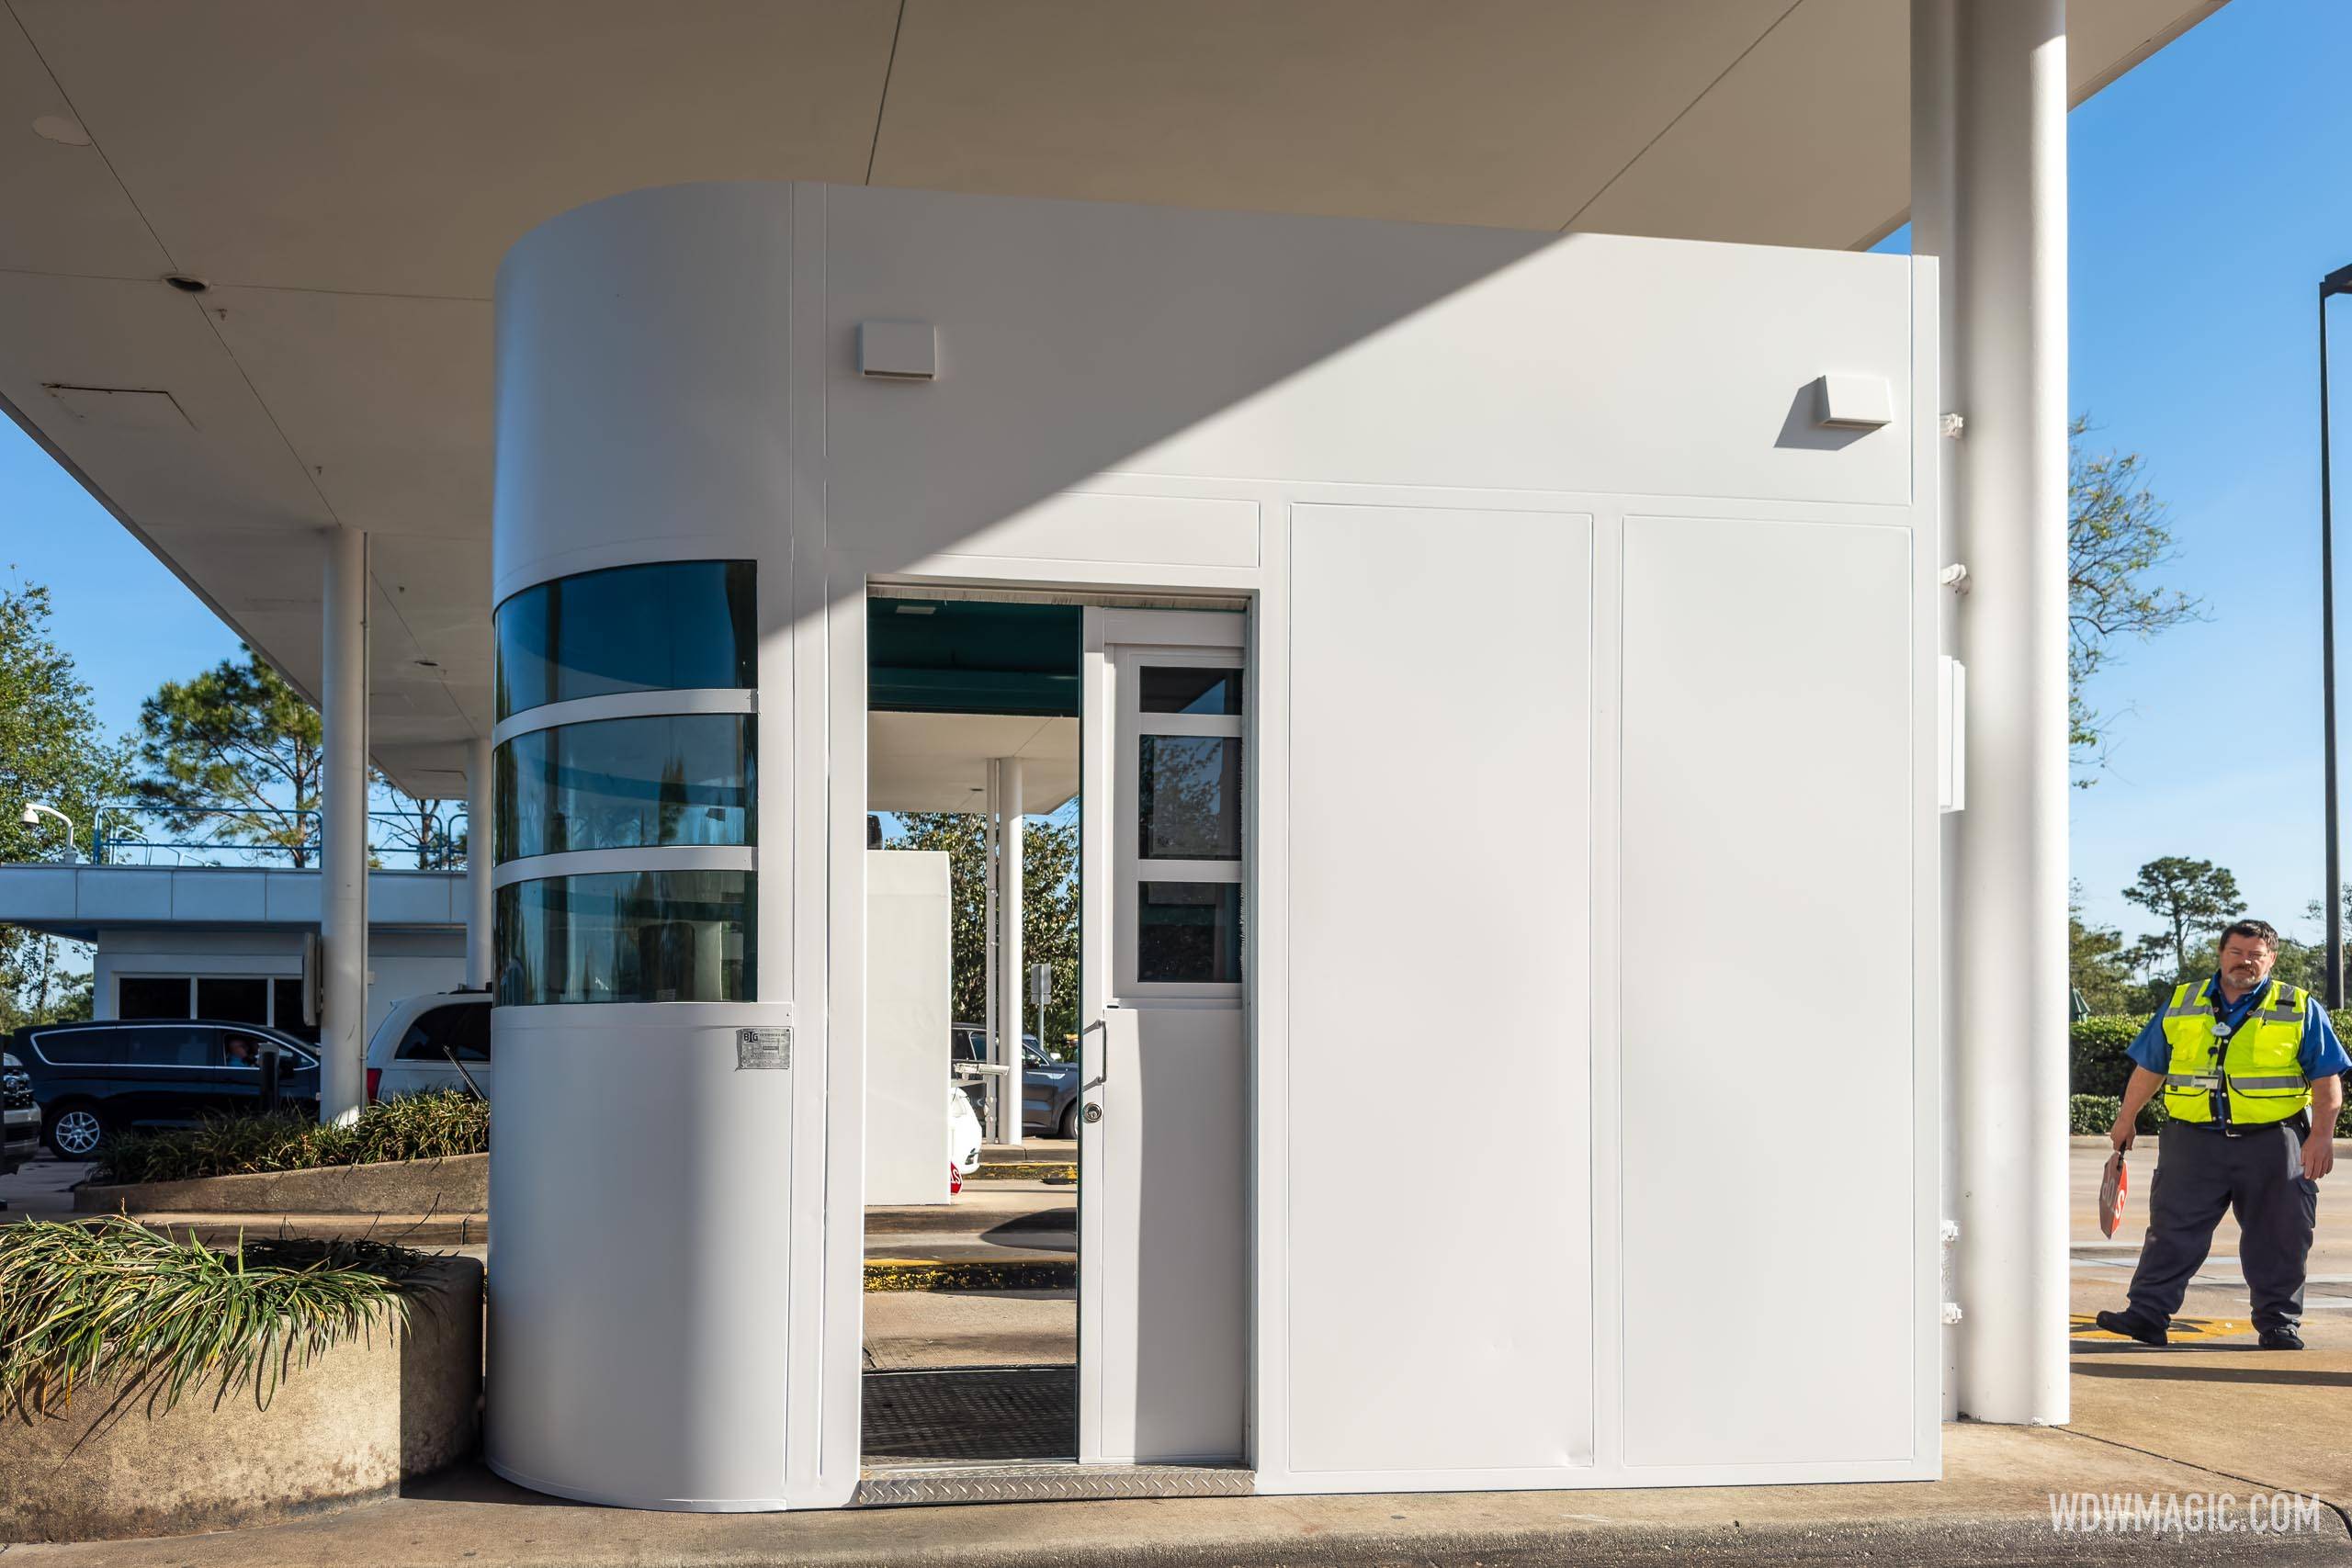 New parking plaza kiosks at EPCOT